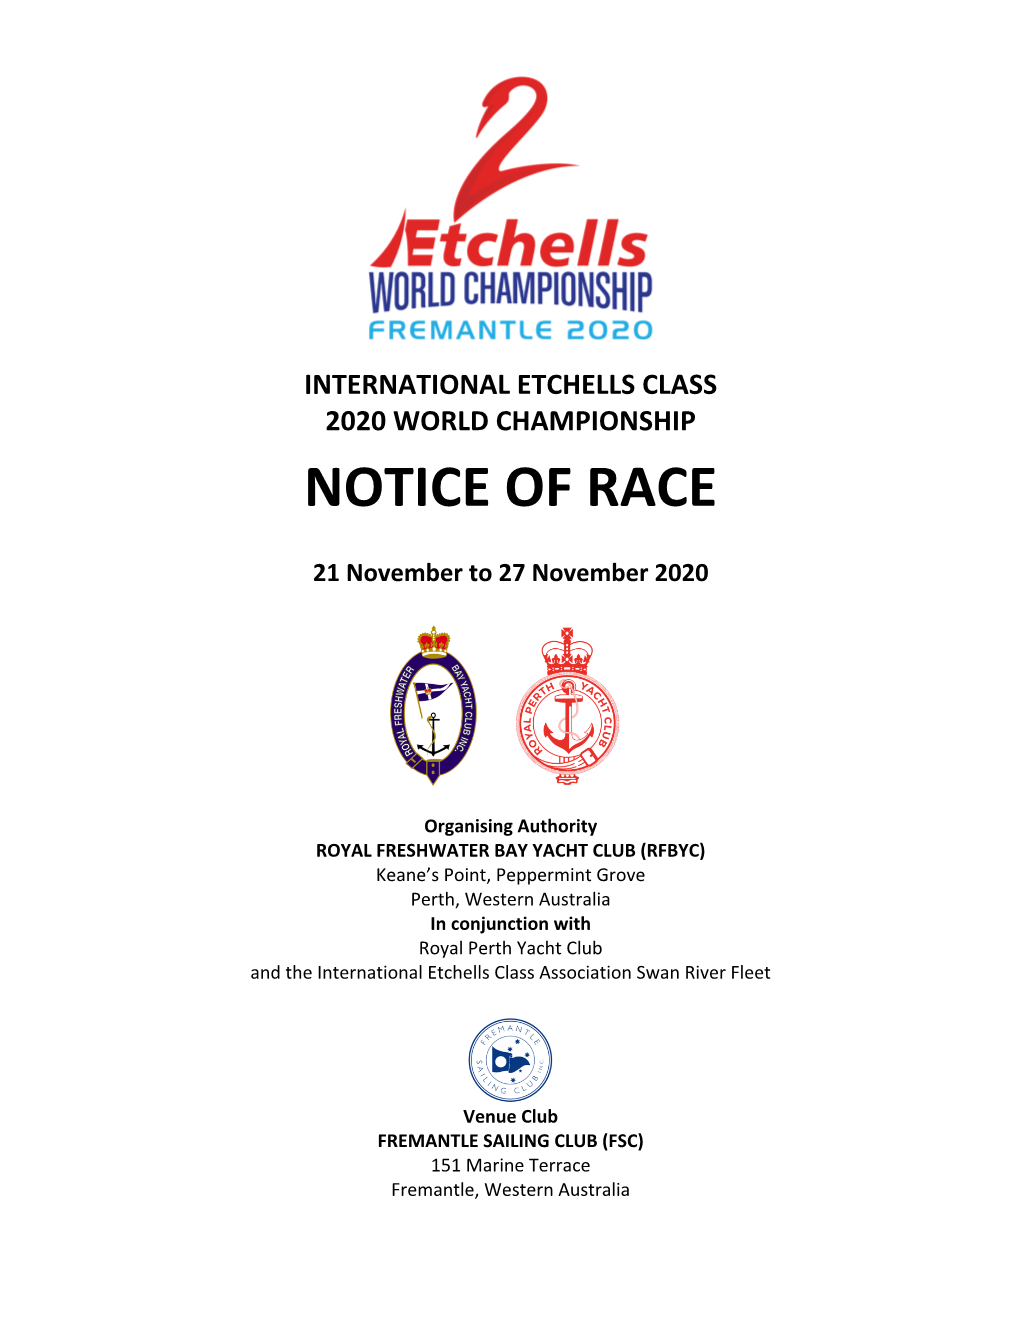 International Etchells Class 2020 World Championship Notice of Race